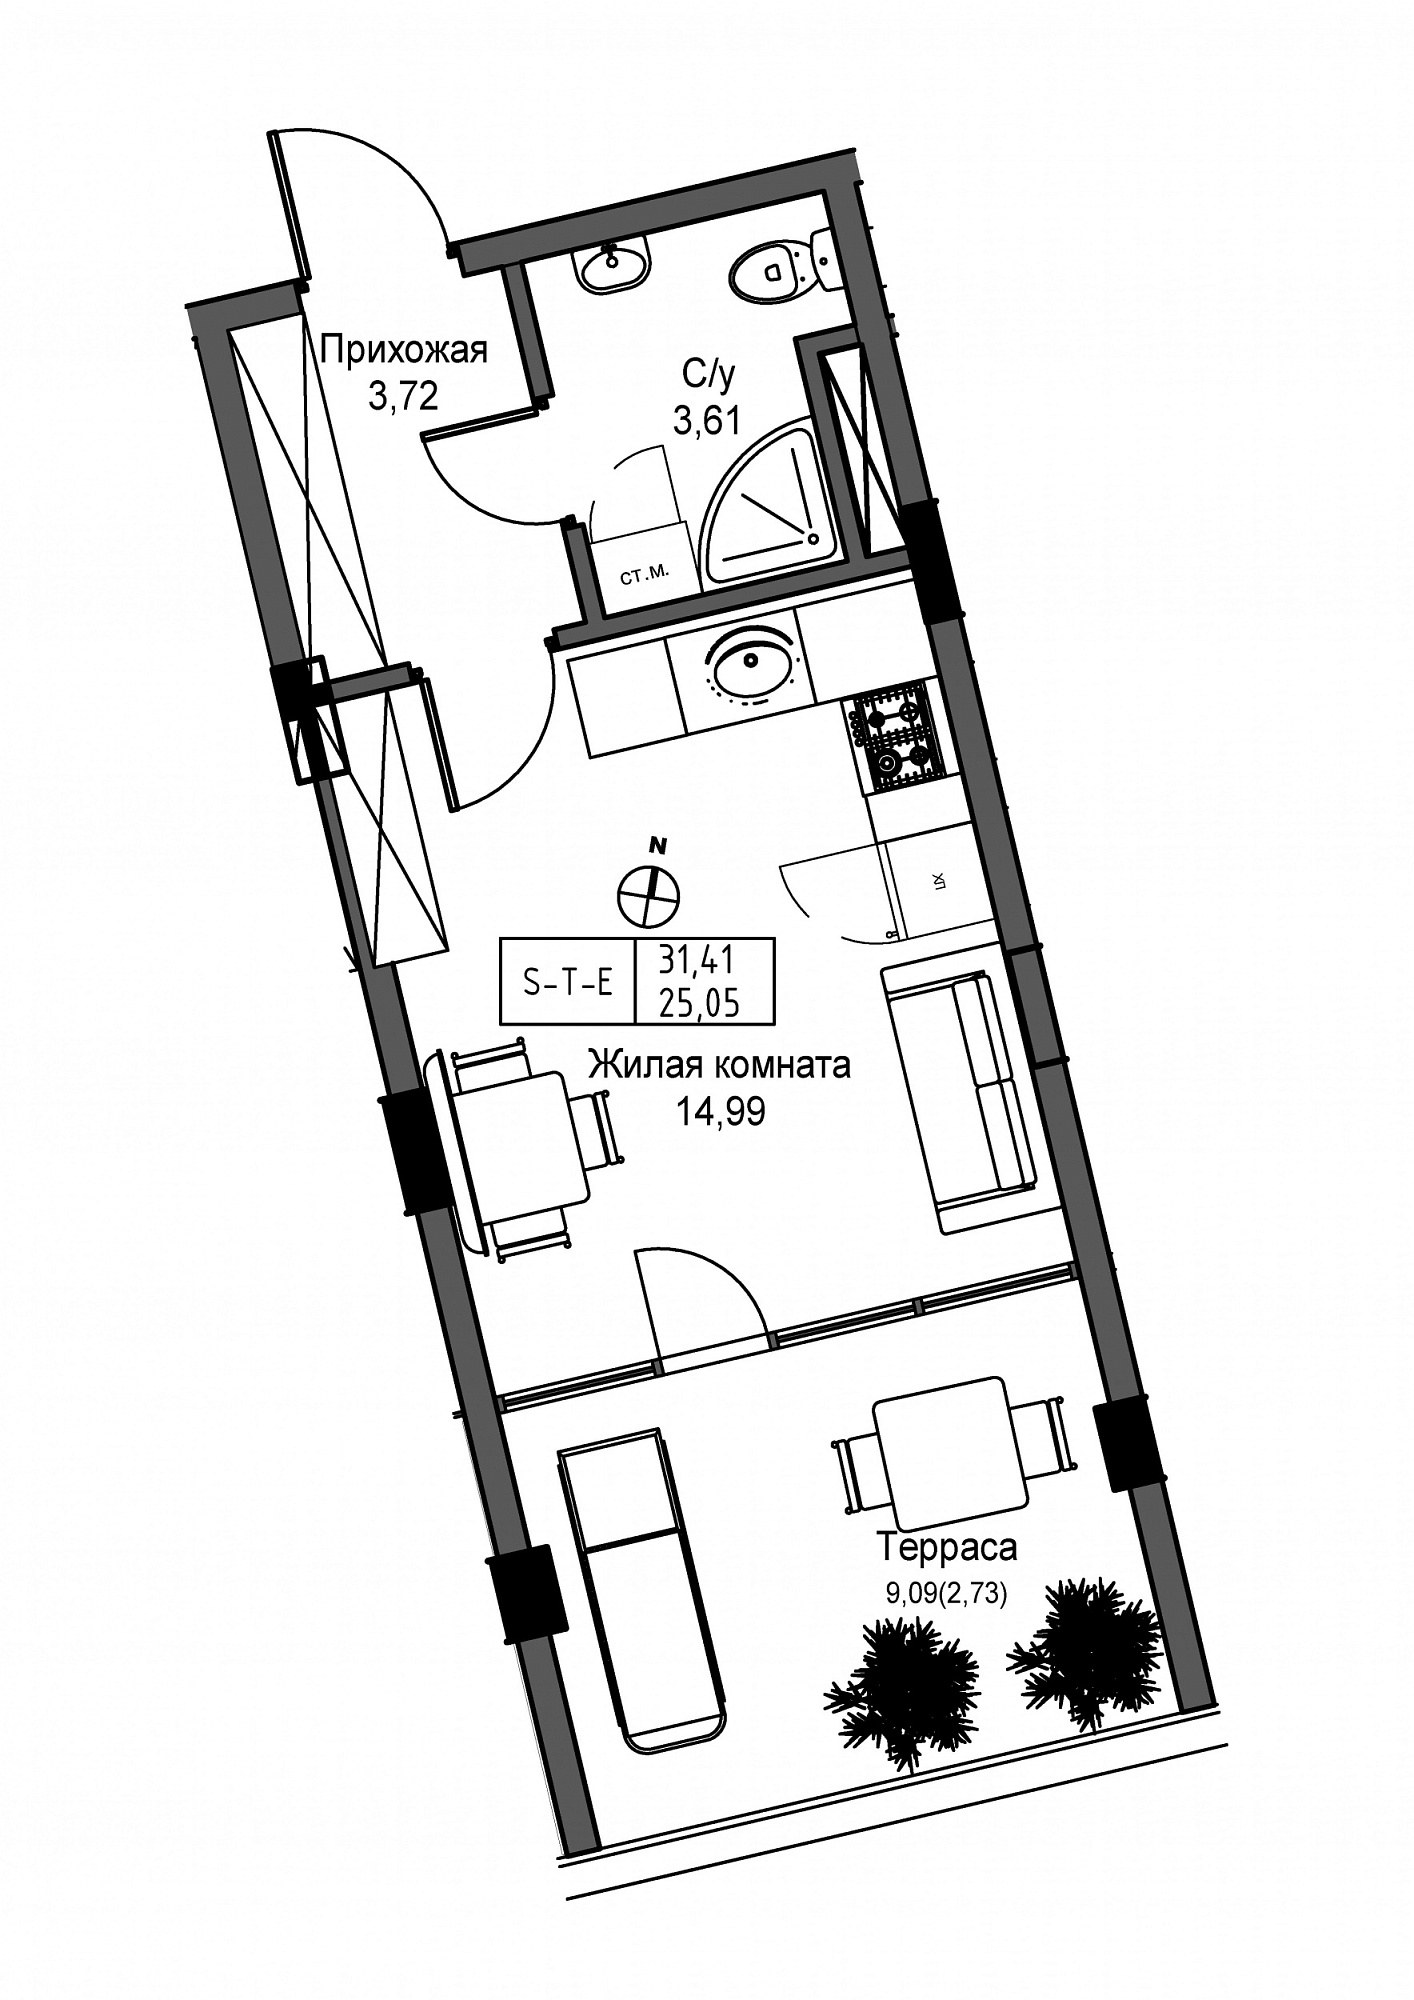 Планування Smart-квартира площею 25.05м2, UM-004-03/0010.